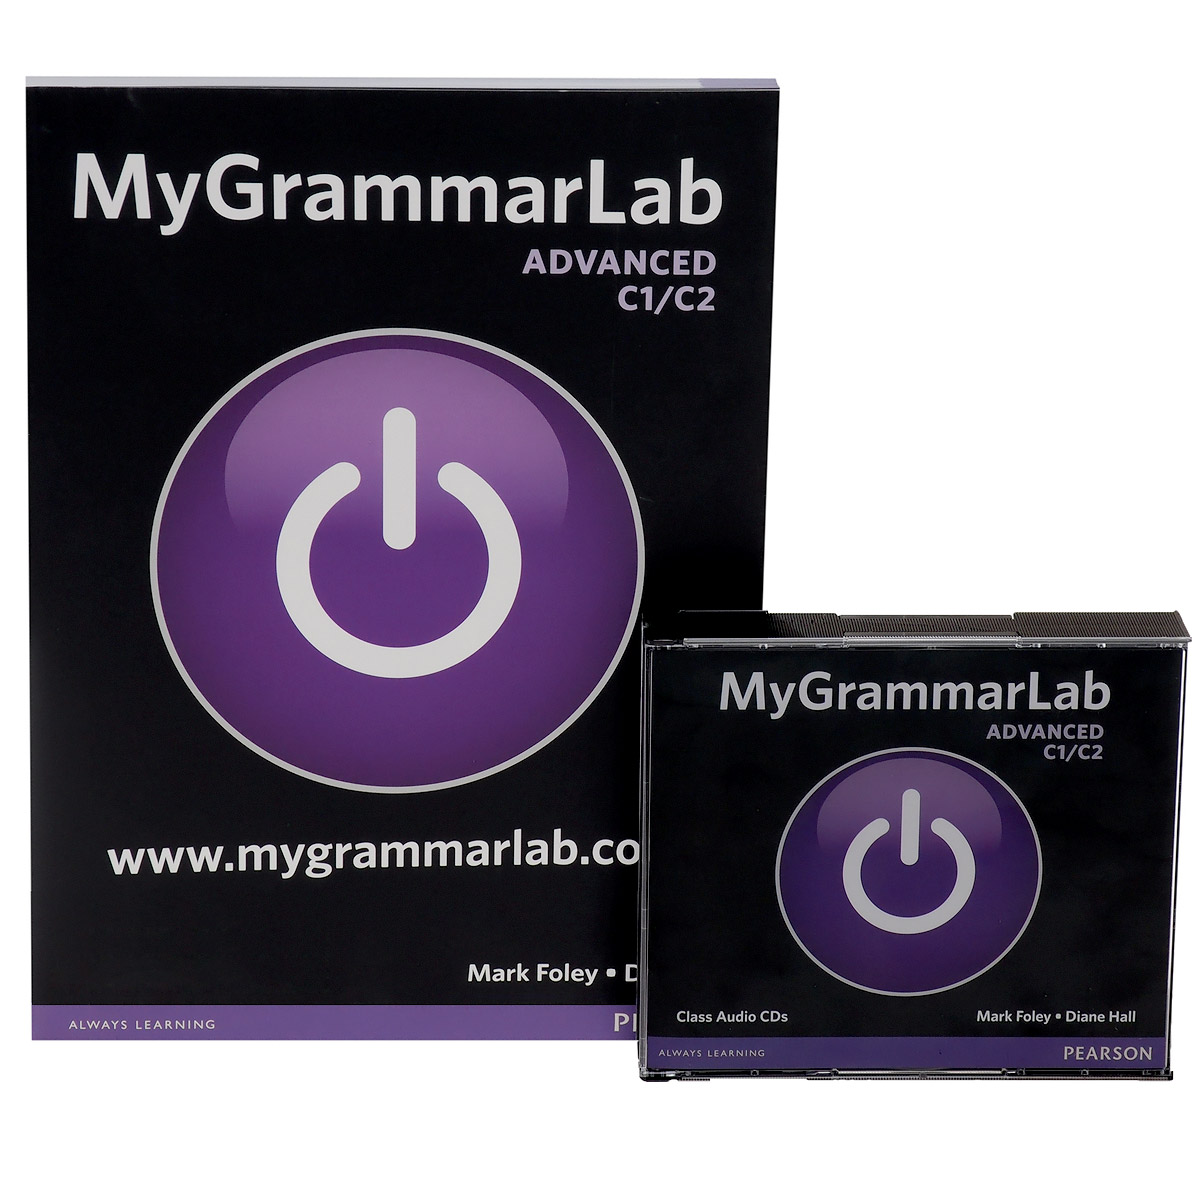 Продвинутый c. MYGRAMMARLAB c1 c2. MYGRAMMARLAB Advanced c1/c2. Книга my Grammar Lab. Grammar Lab Advanced.